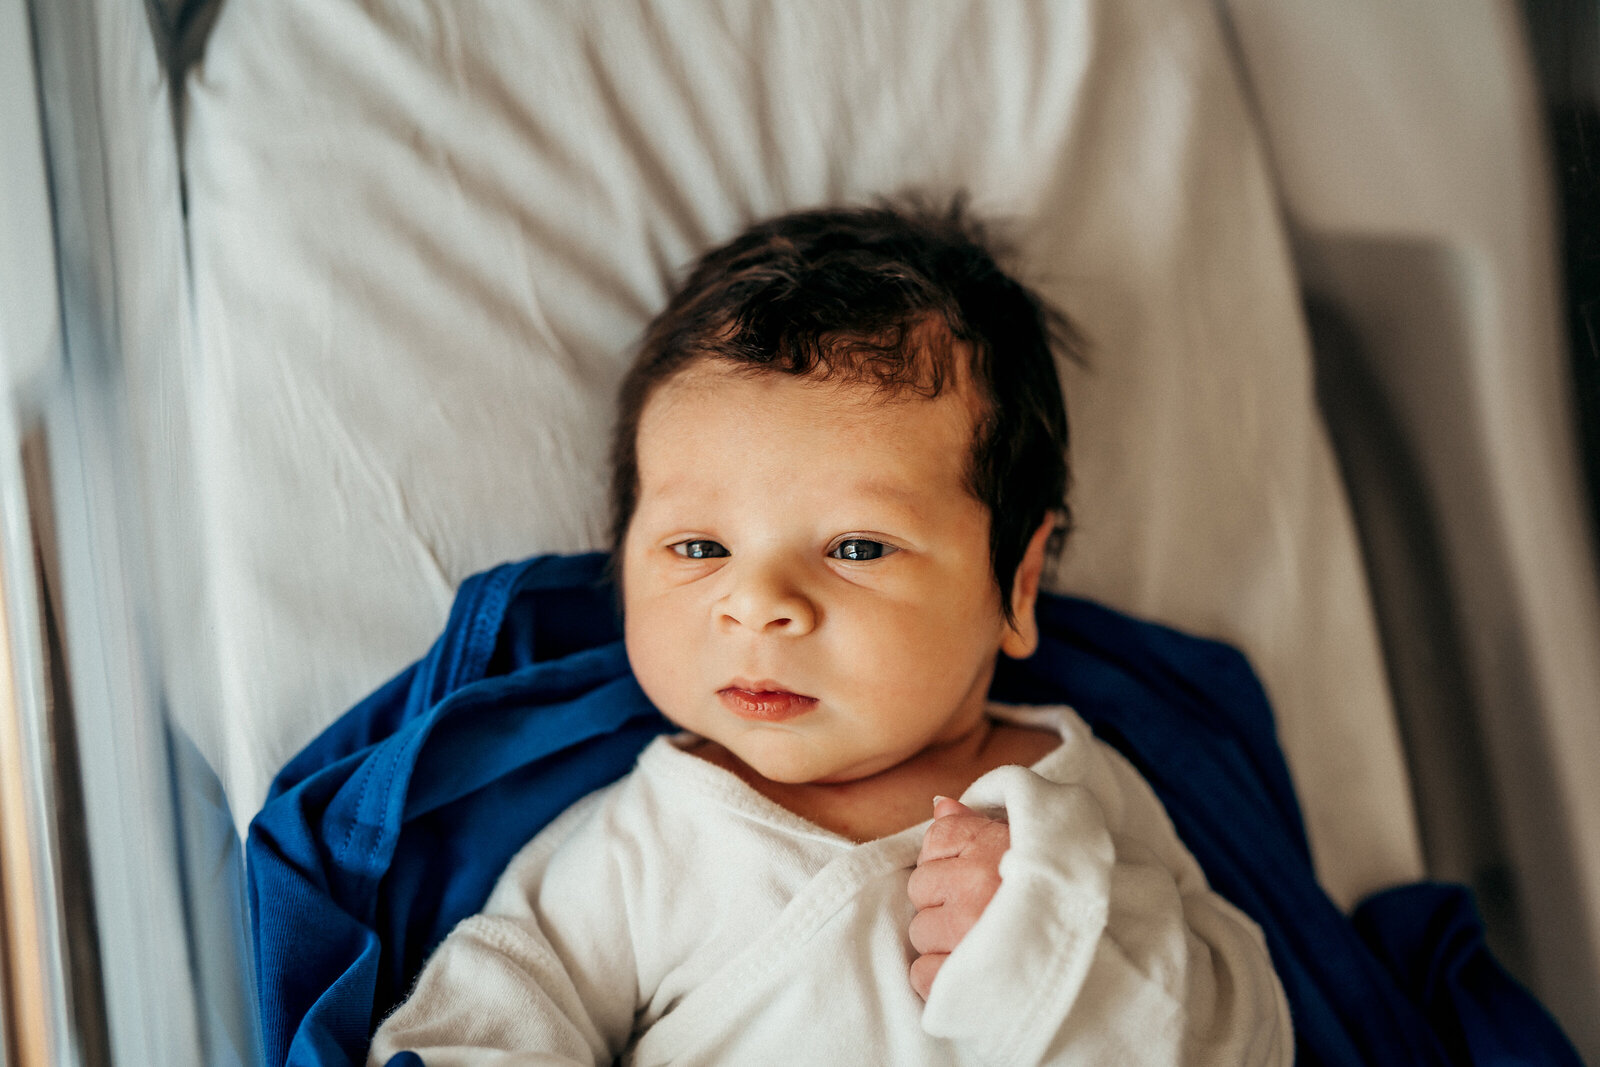 newborn in hosital bassinett